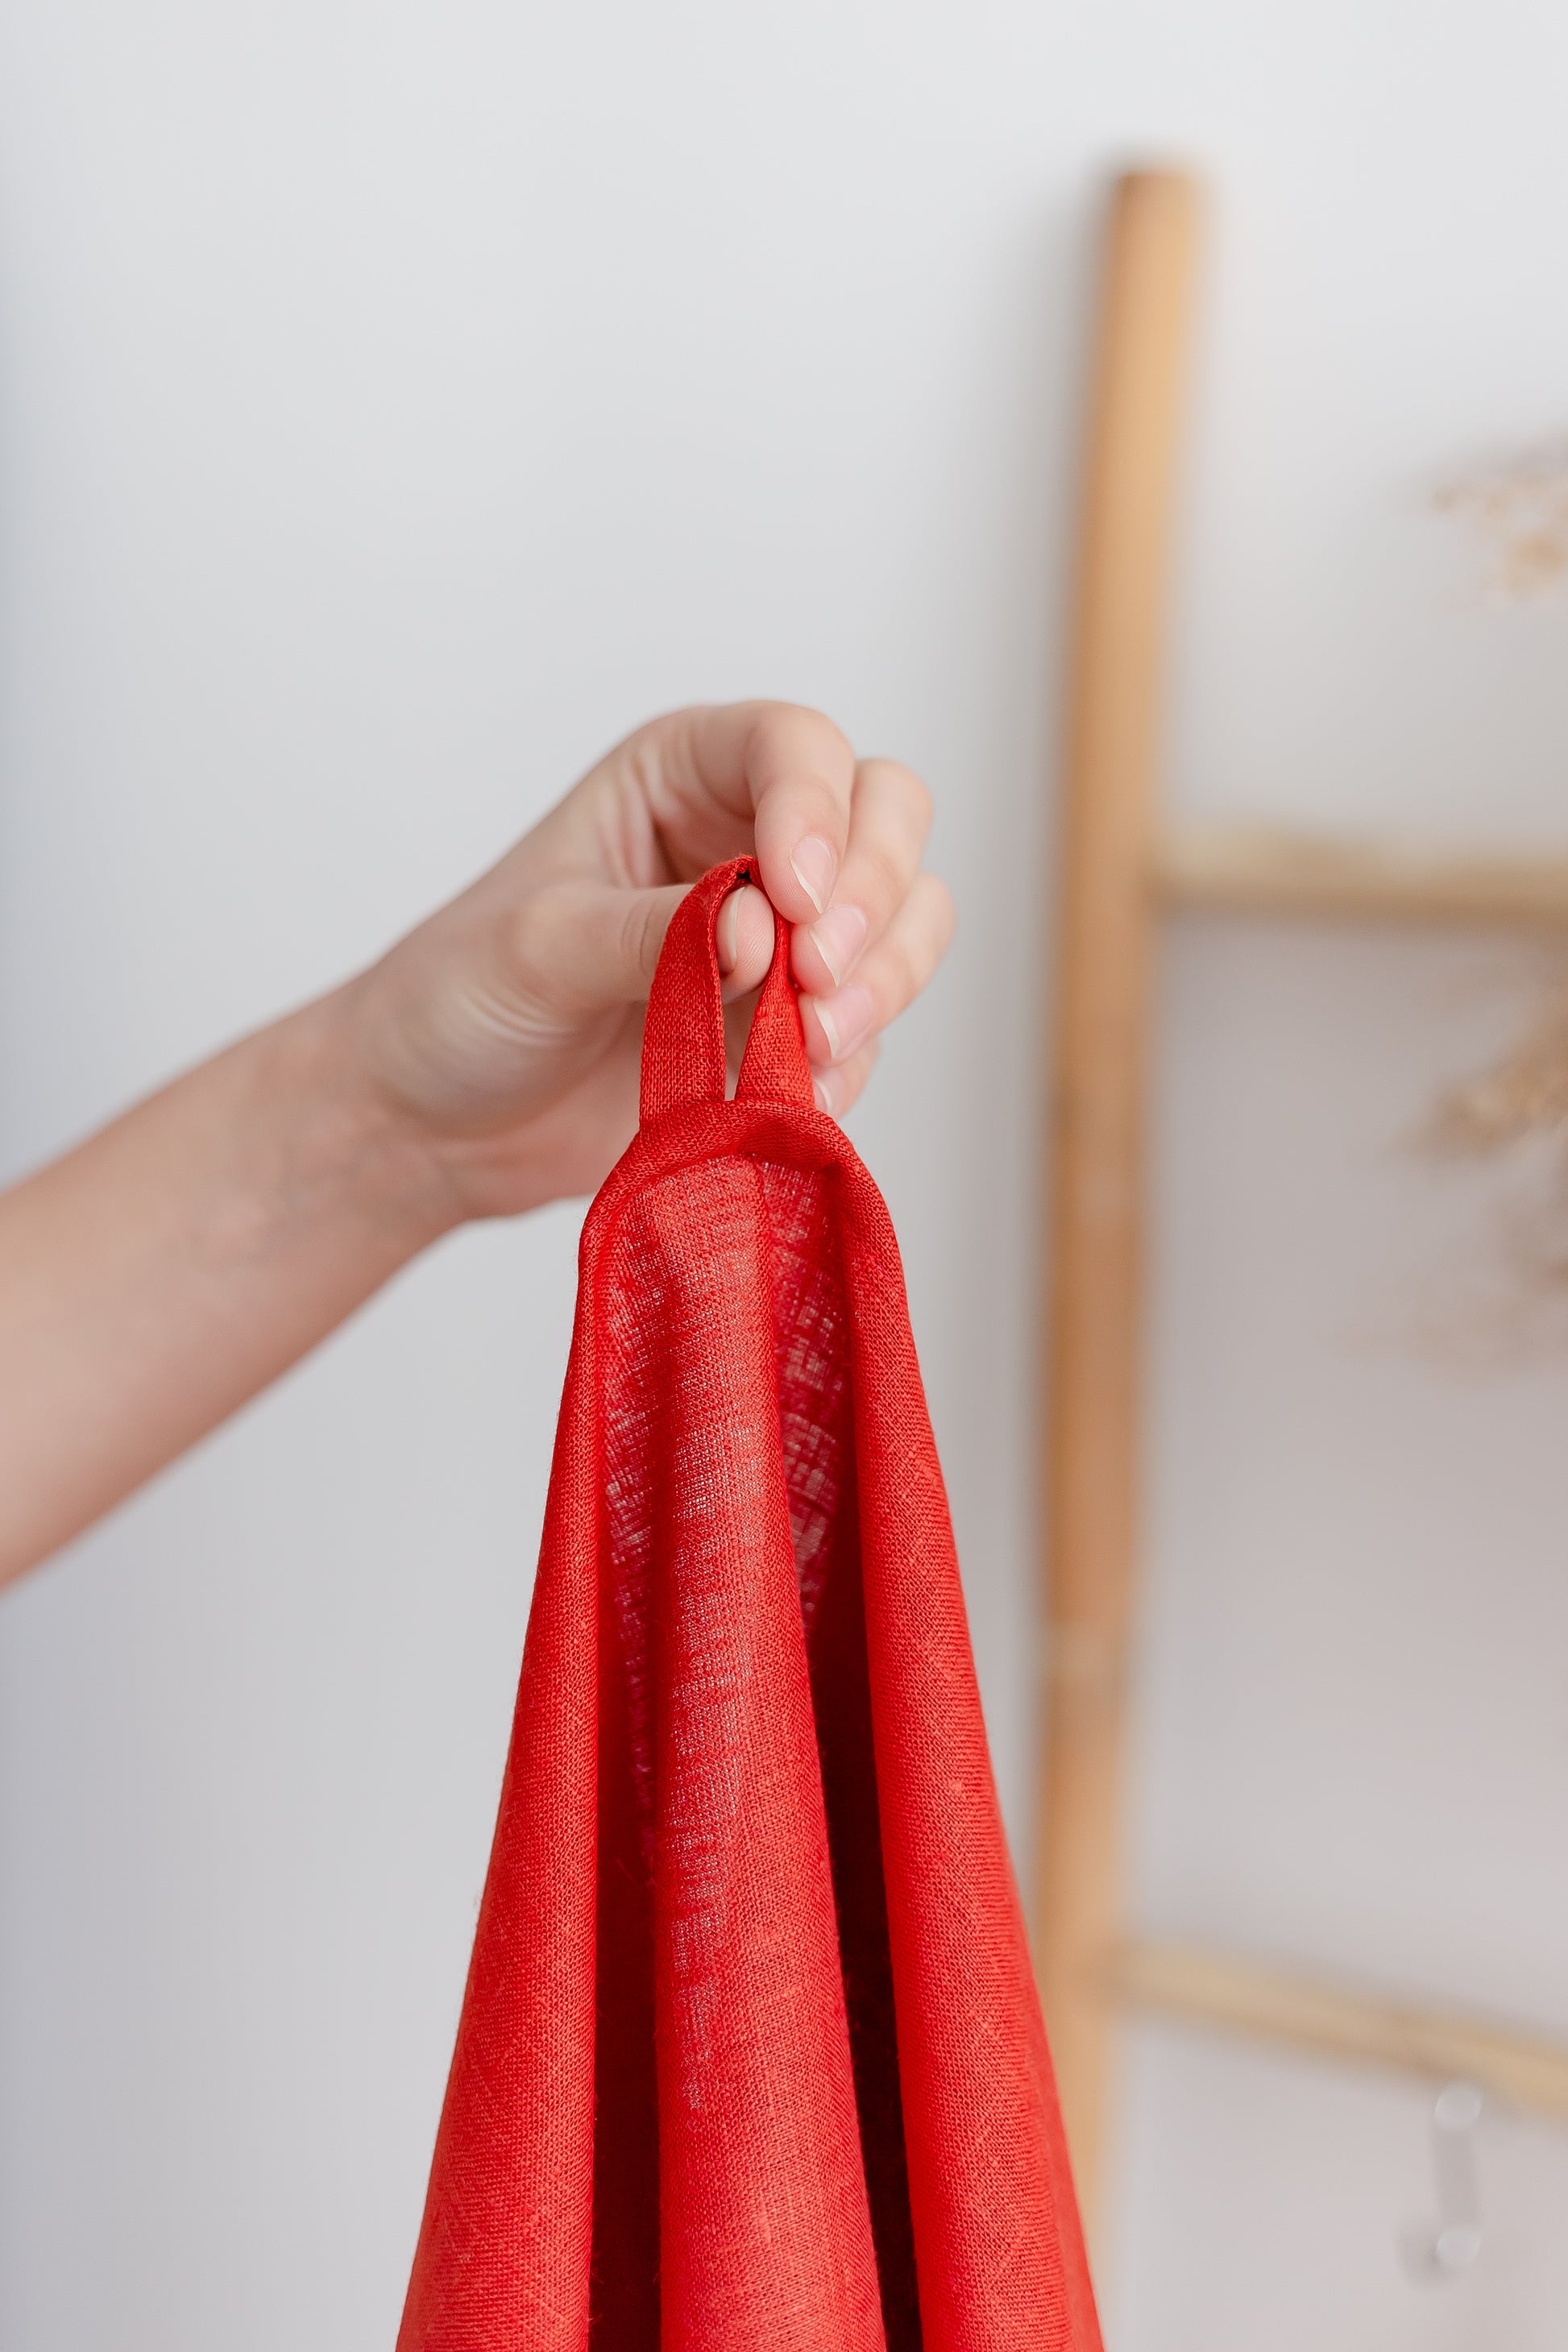 Red linen kitchen towel